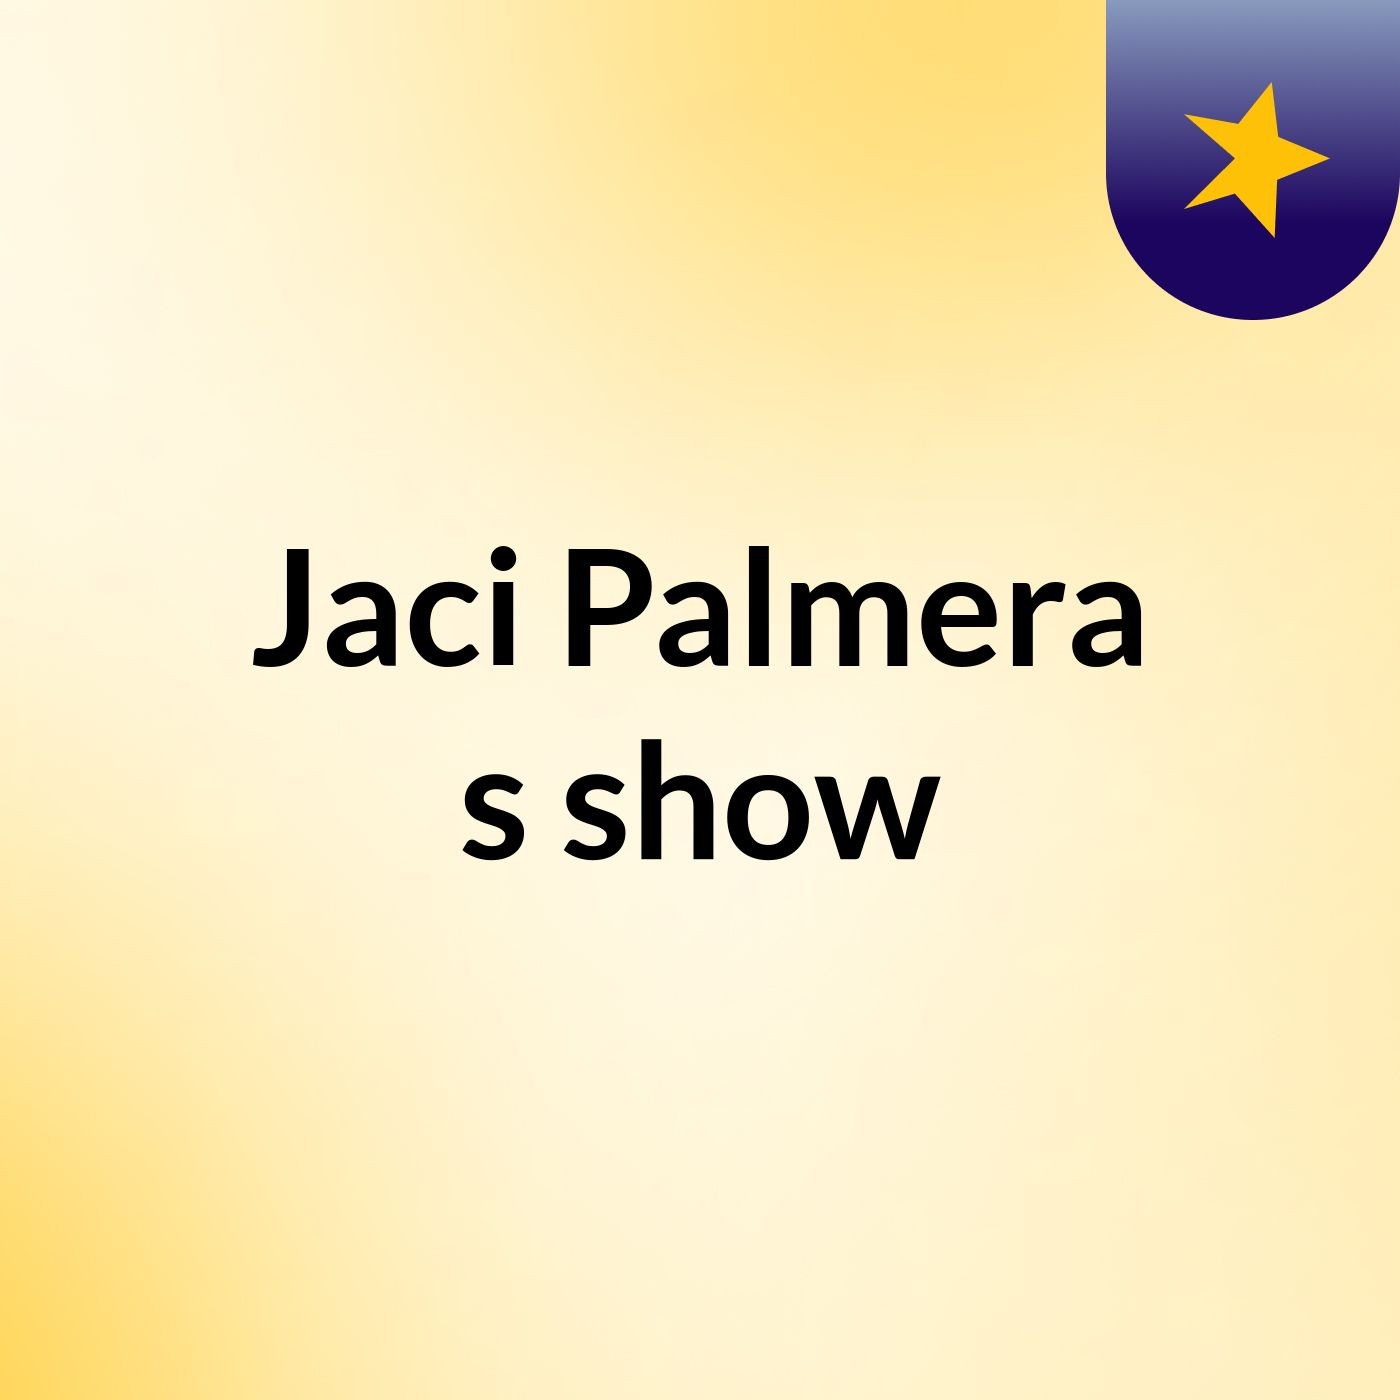 Jaci Palmera's show